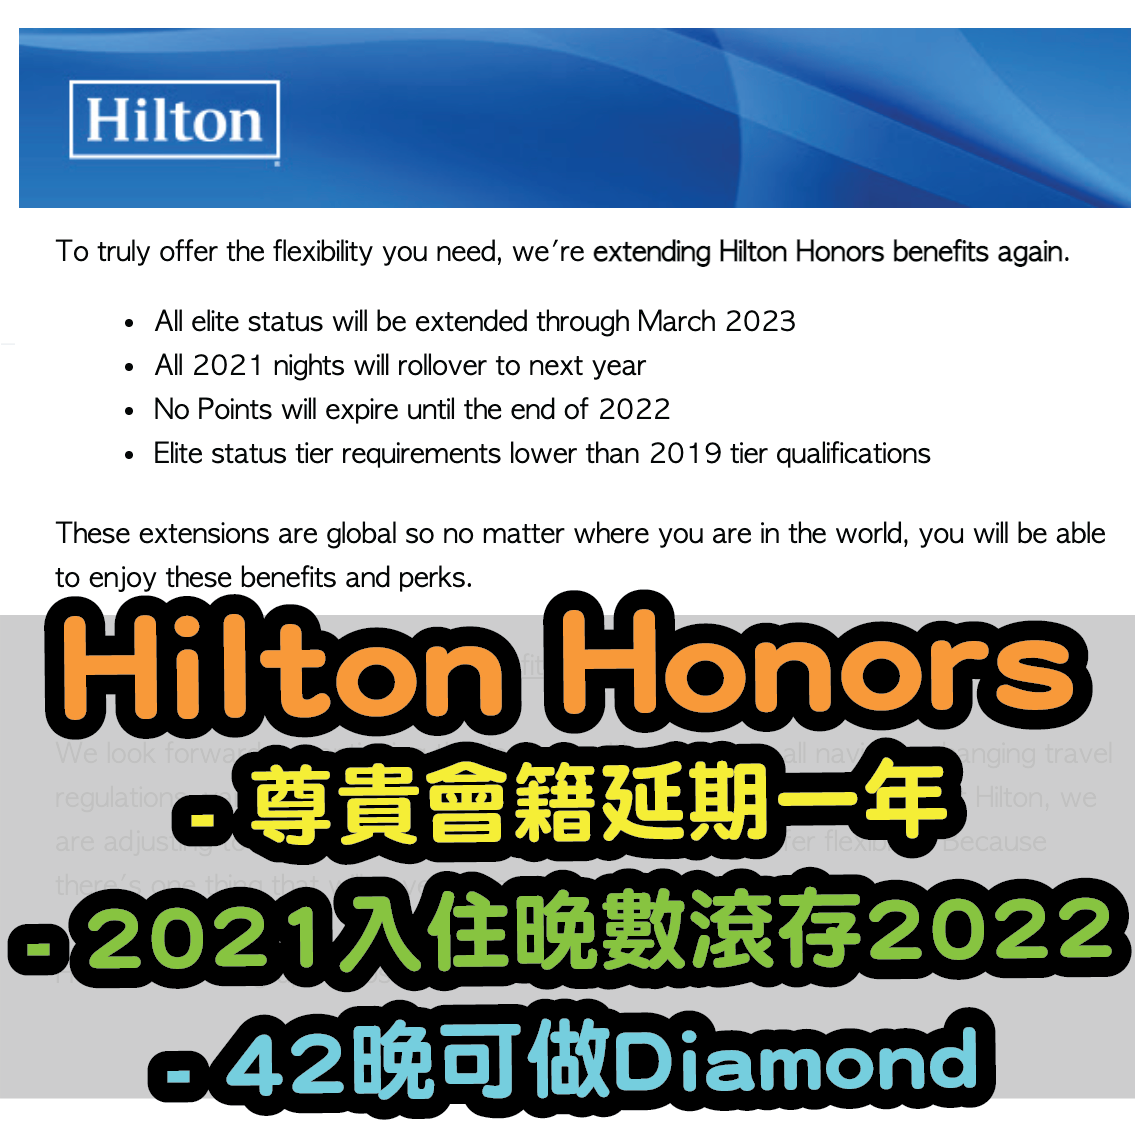 Hilton Honors希爾頓酒店常客會員計劃玩法詳解及優惠！會籍延期至2023年3月！Status Match 9晚就可以Diamond啦！